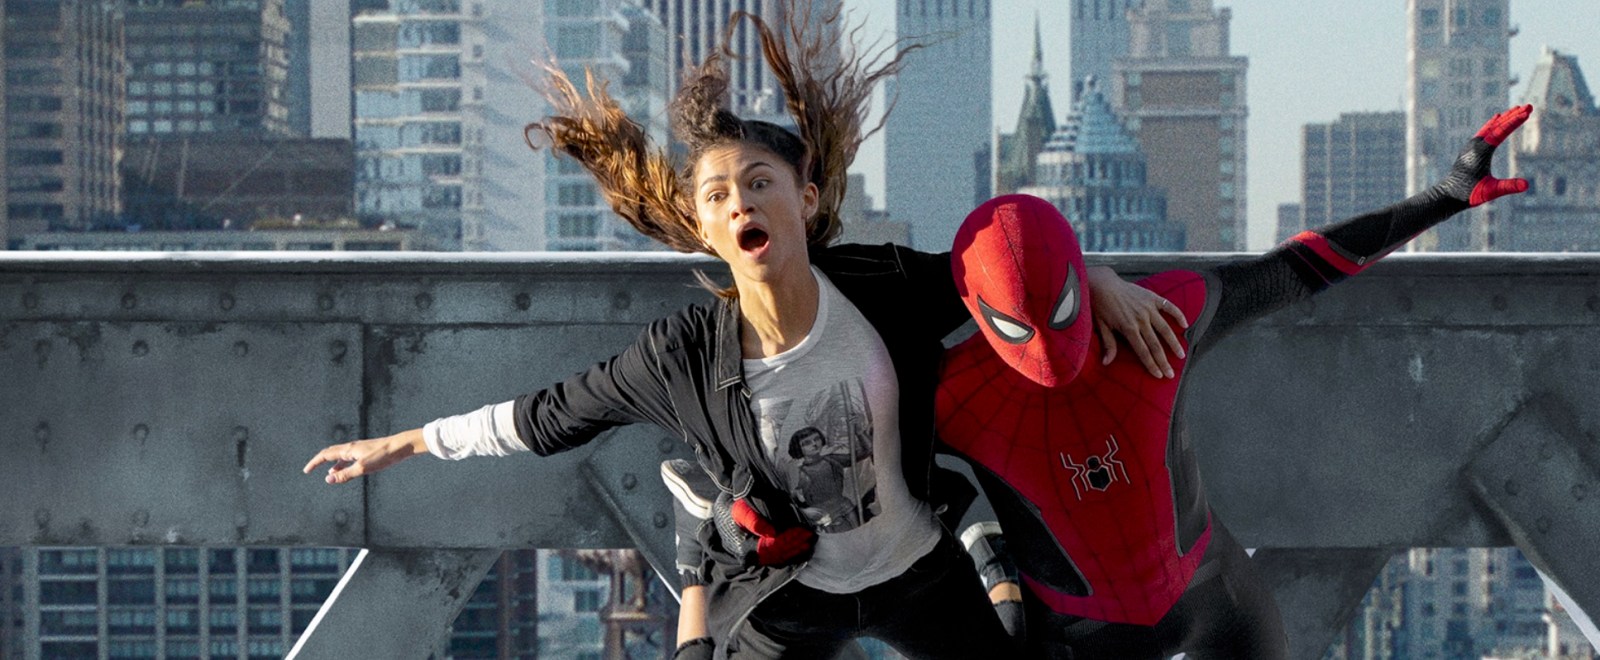 Spider-Man: No Way Home' Crosses $1 Billion Mark